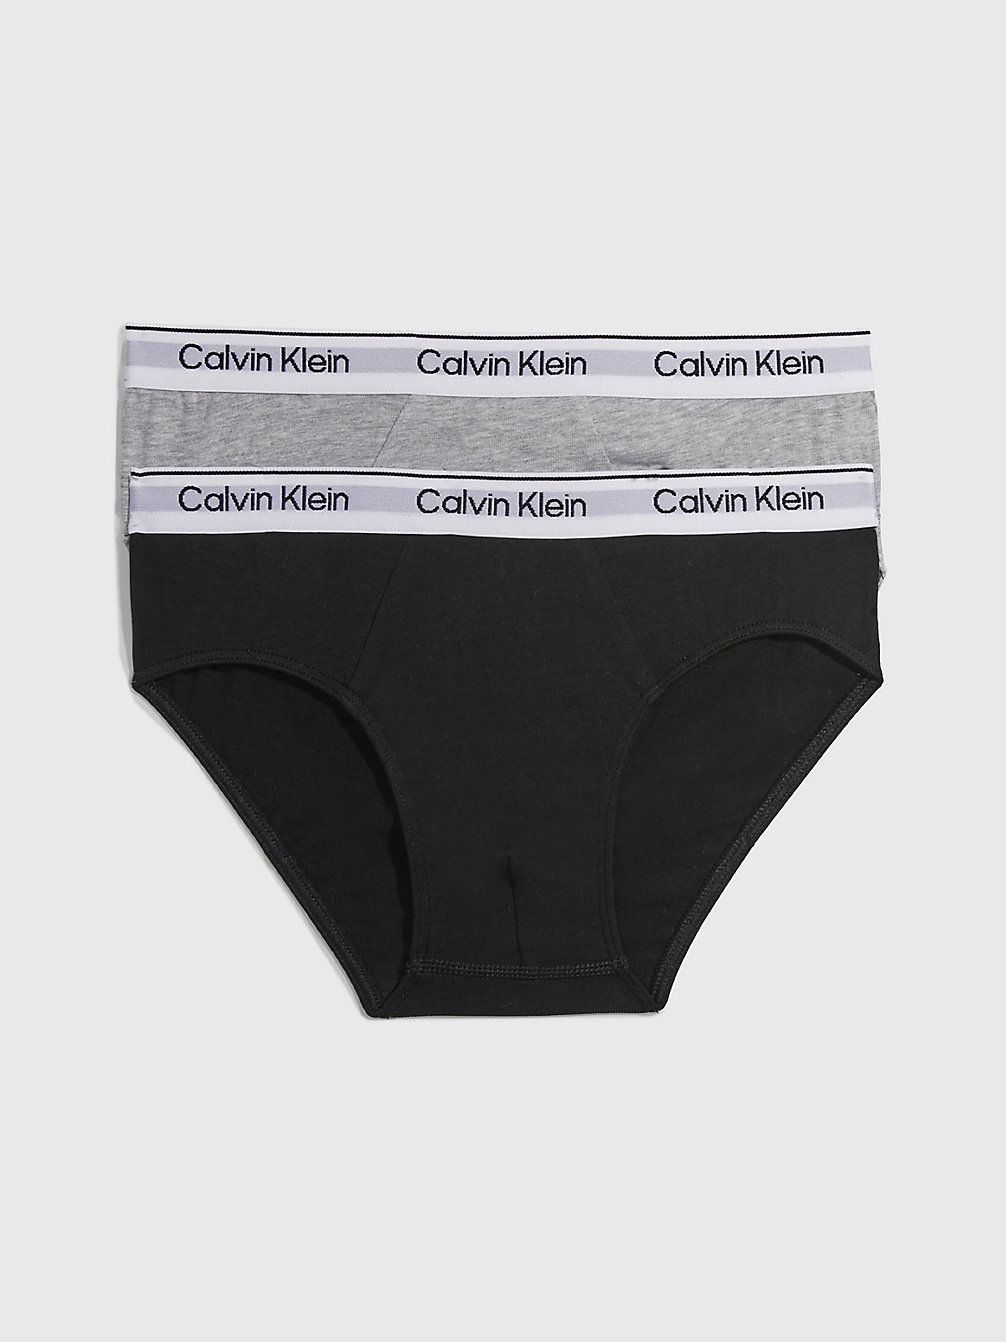 GREYHEATHER/PVHBLACK > Zestaw 2 Par Slipów Chłopięcych - Modern Cotton > undefined boys - Calvin Klein